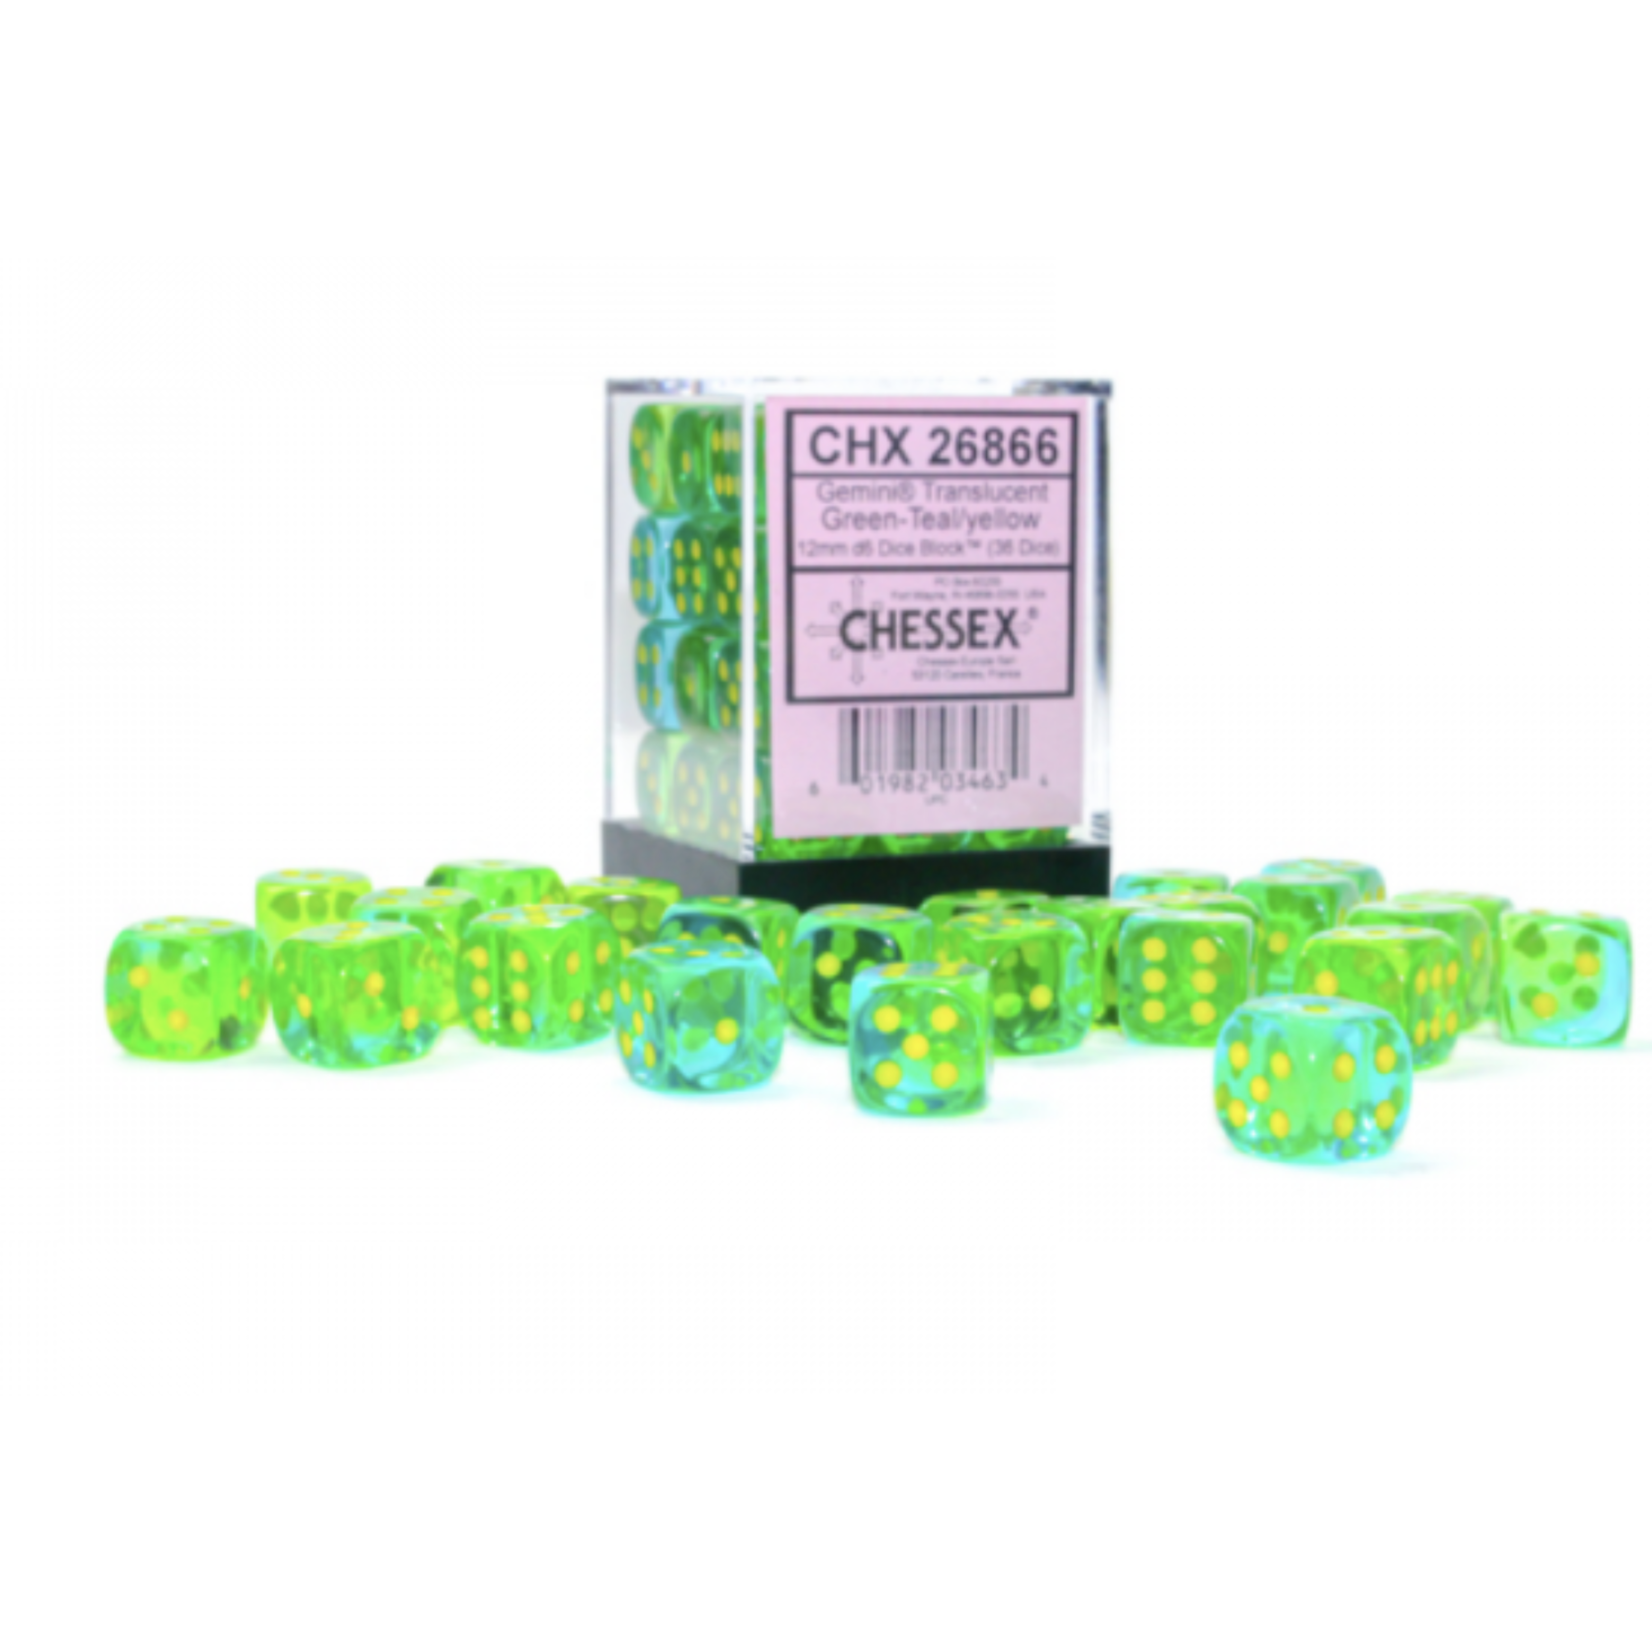 Chessex Gemini Translucent Green Teal Yellow 12mm d6 dice (36)